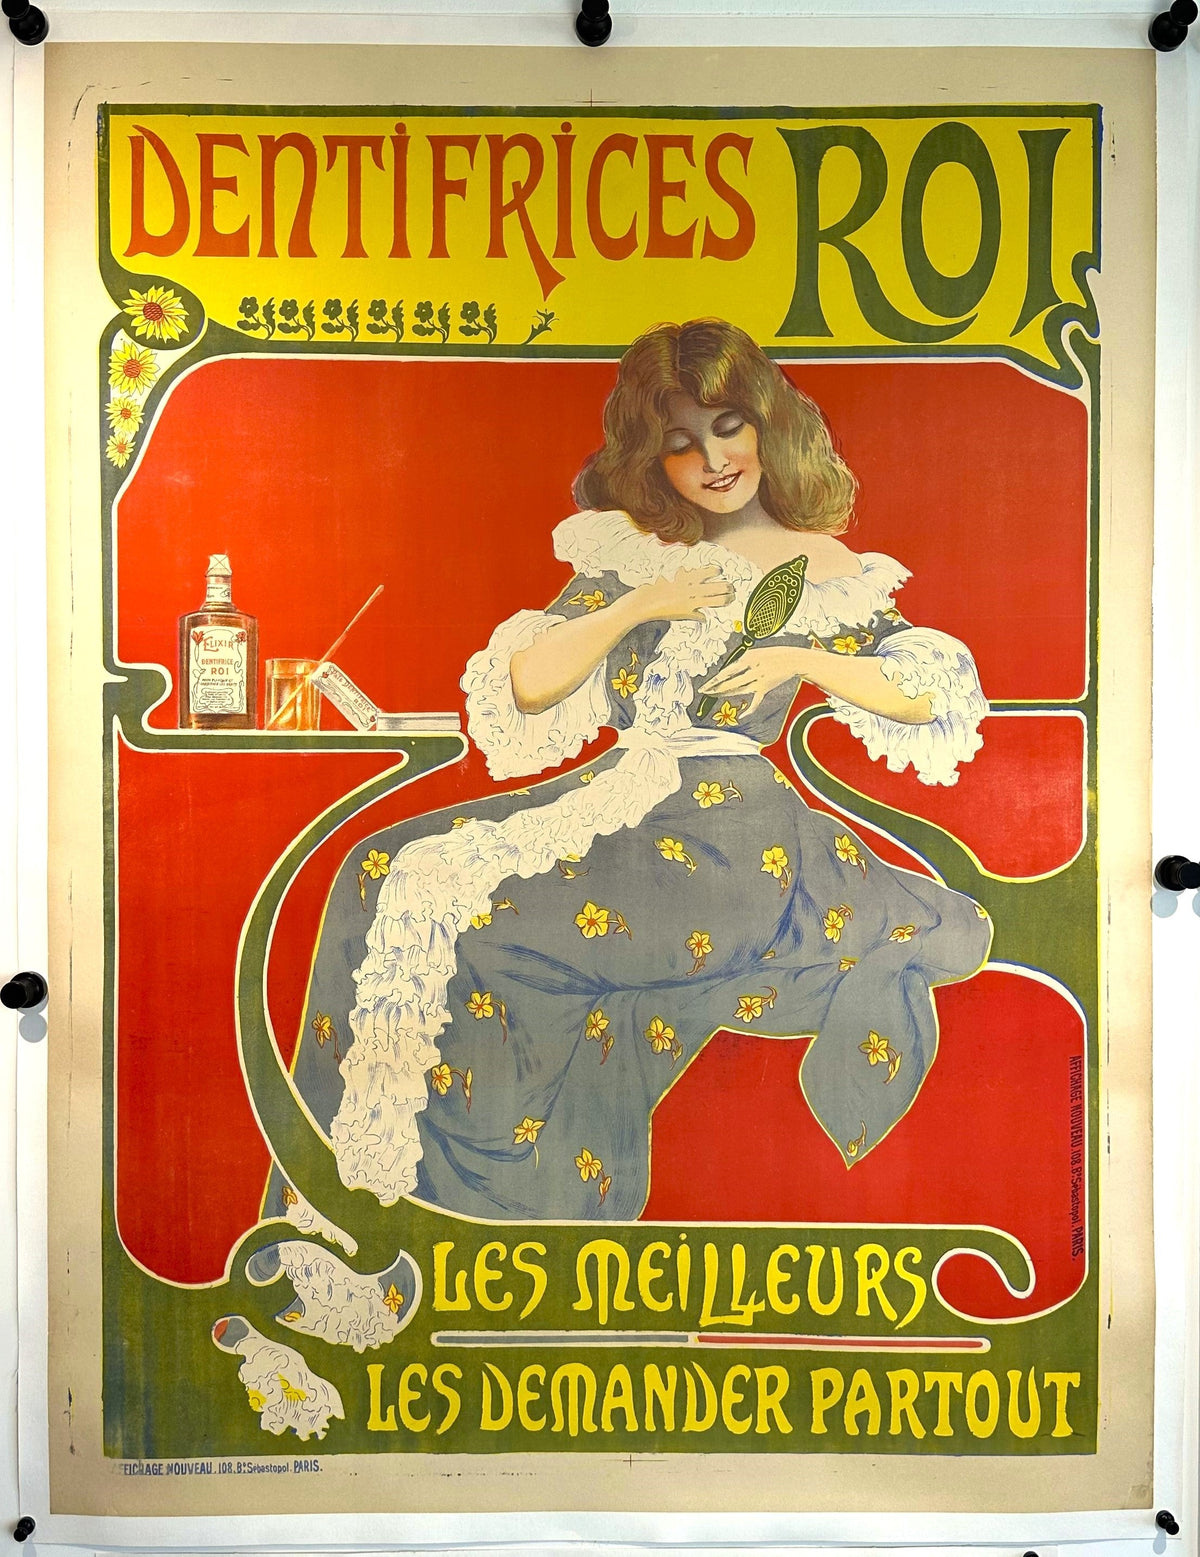 Dentrifices Roi - Authentic Vintage Poster